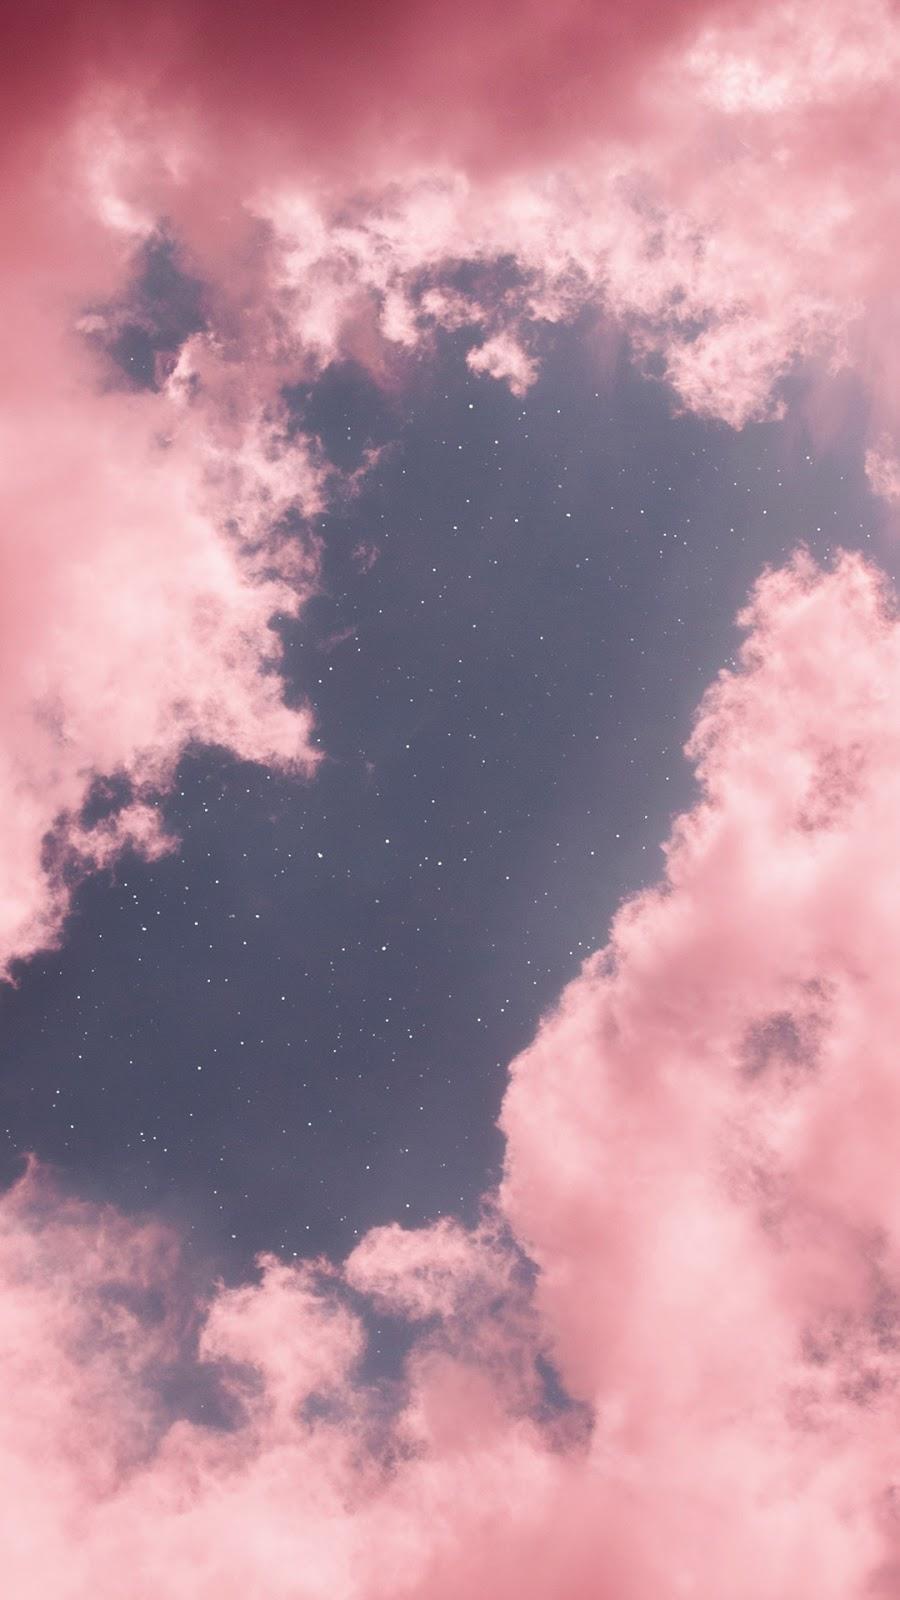 Best cloud #aesthetic #wallpaper